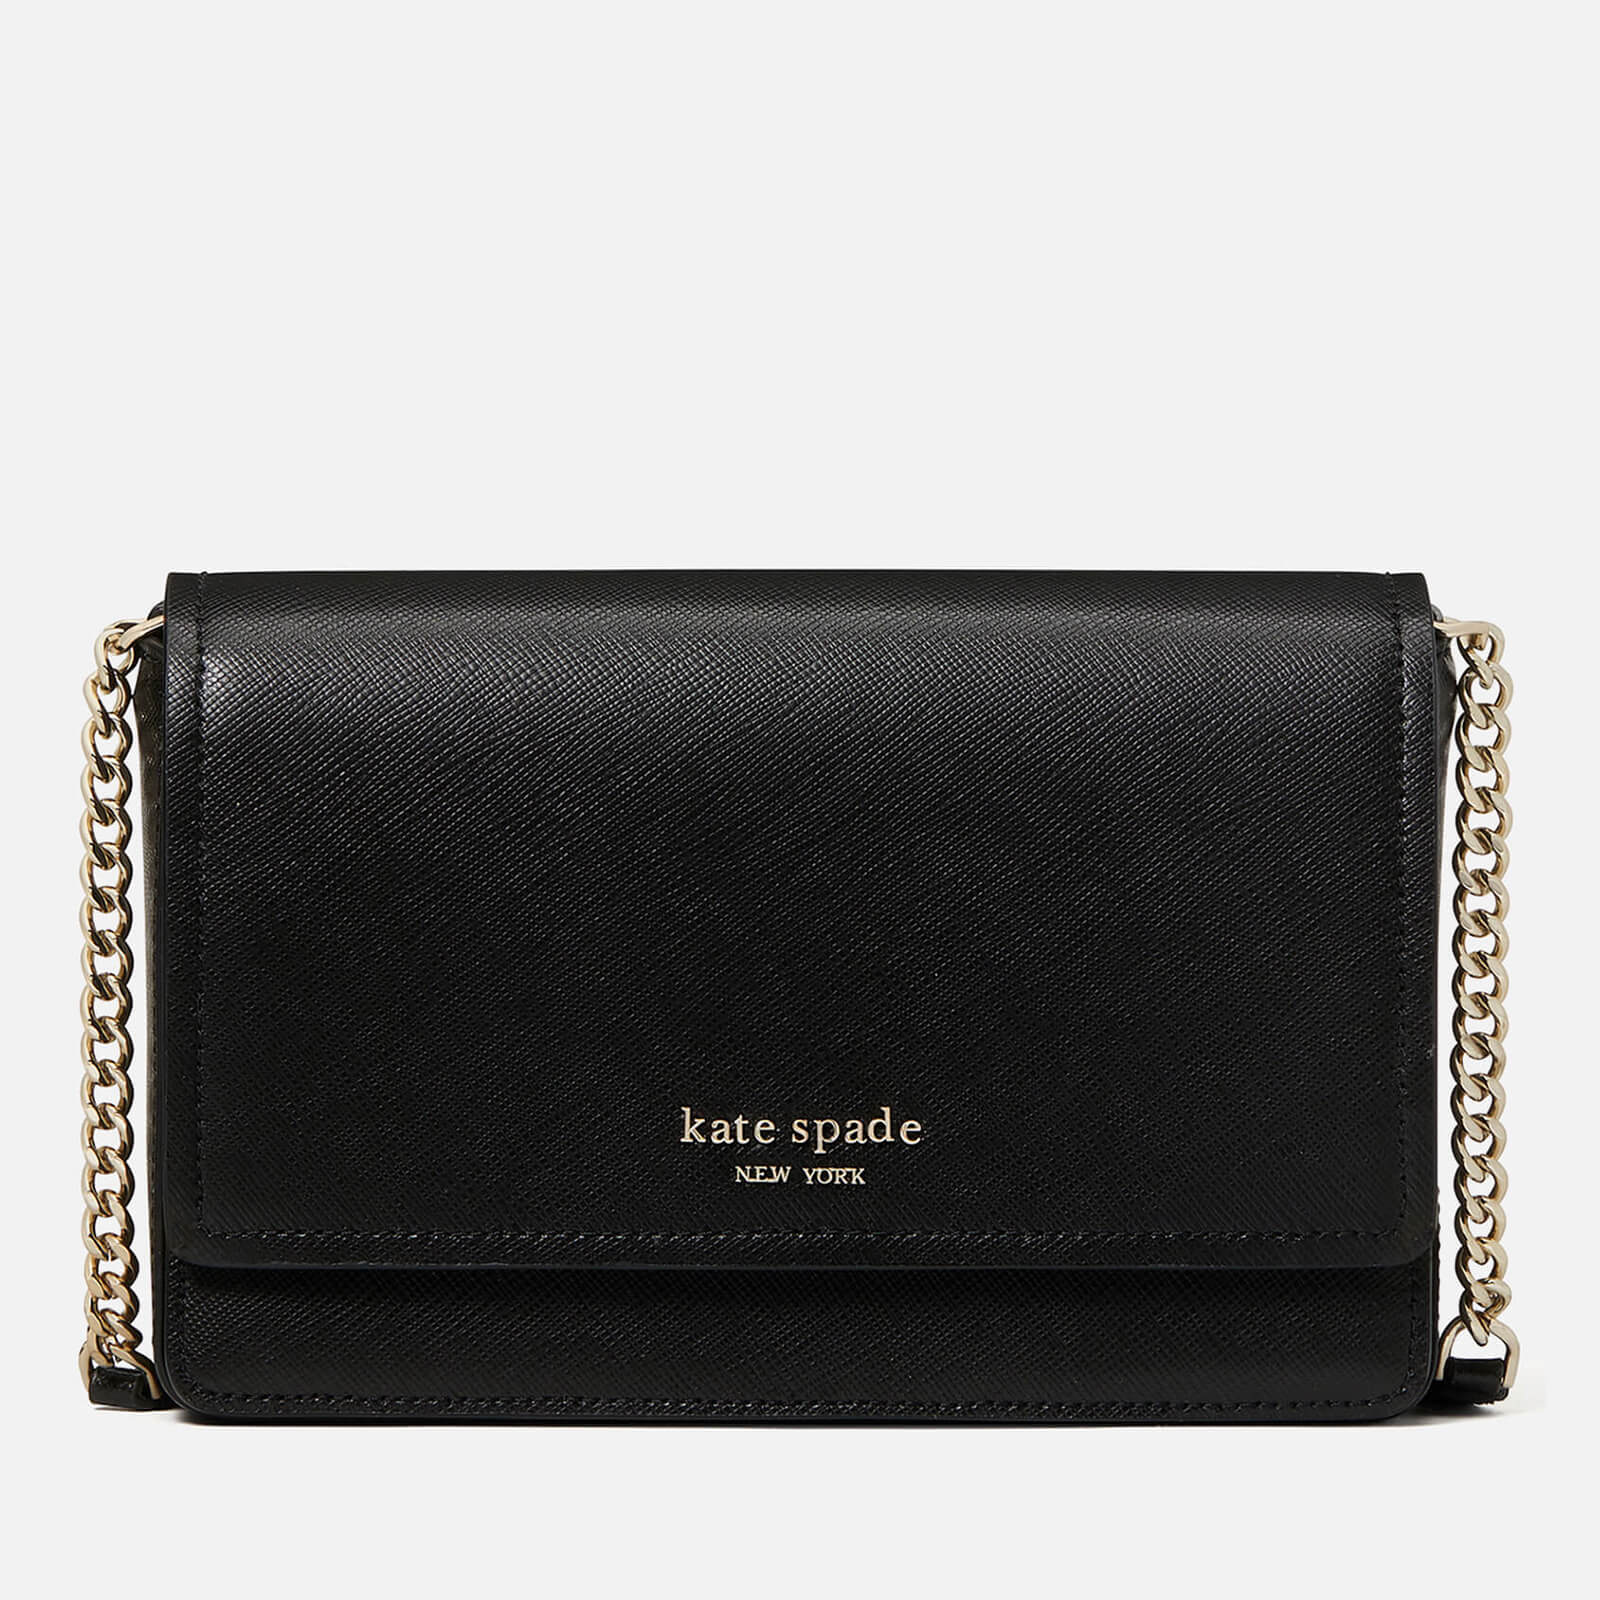 Kate Spade New York Women's Spencer Saffiano Chain Wallet - Black